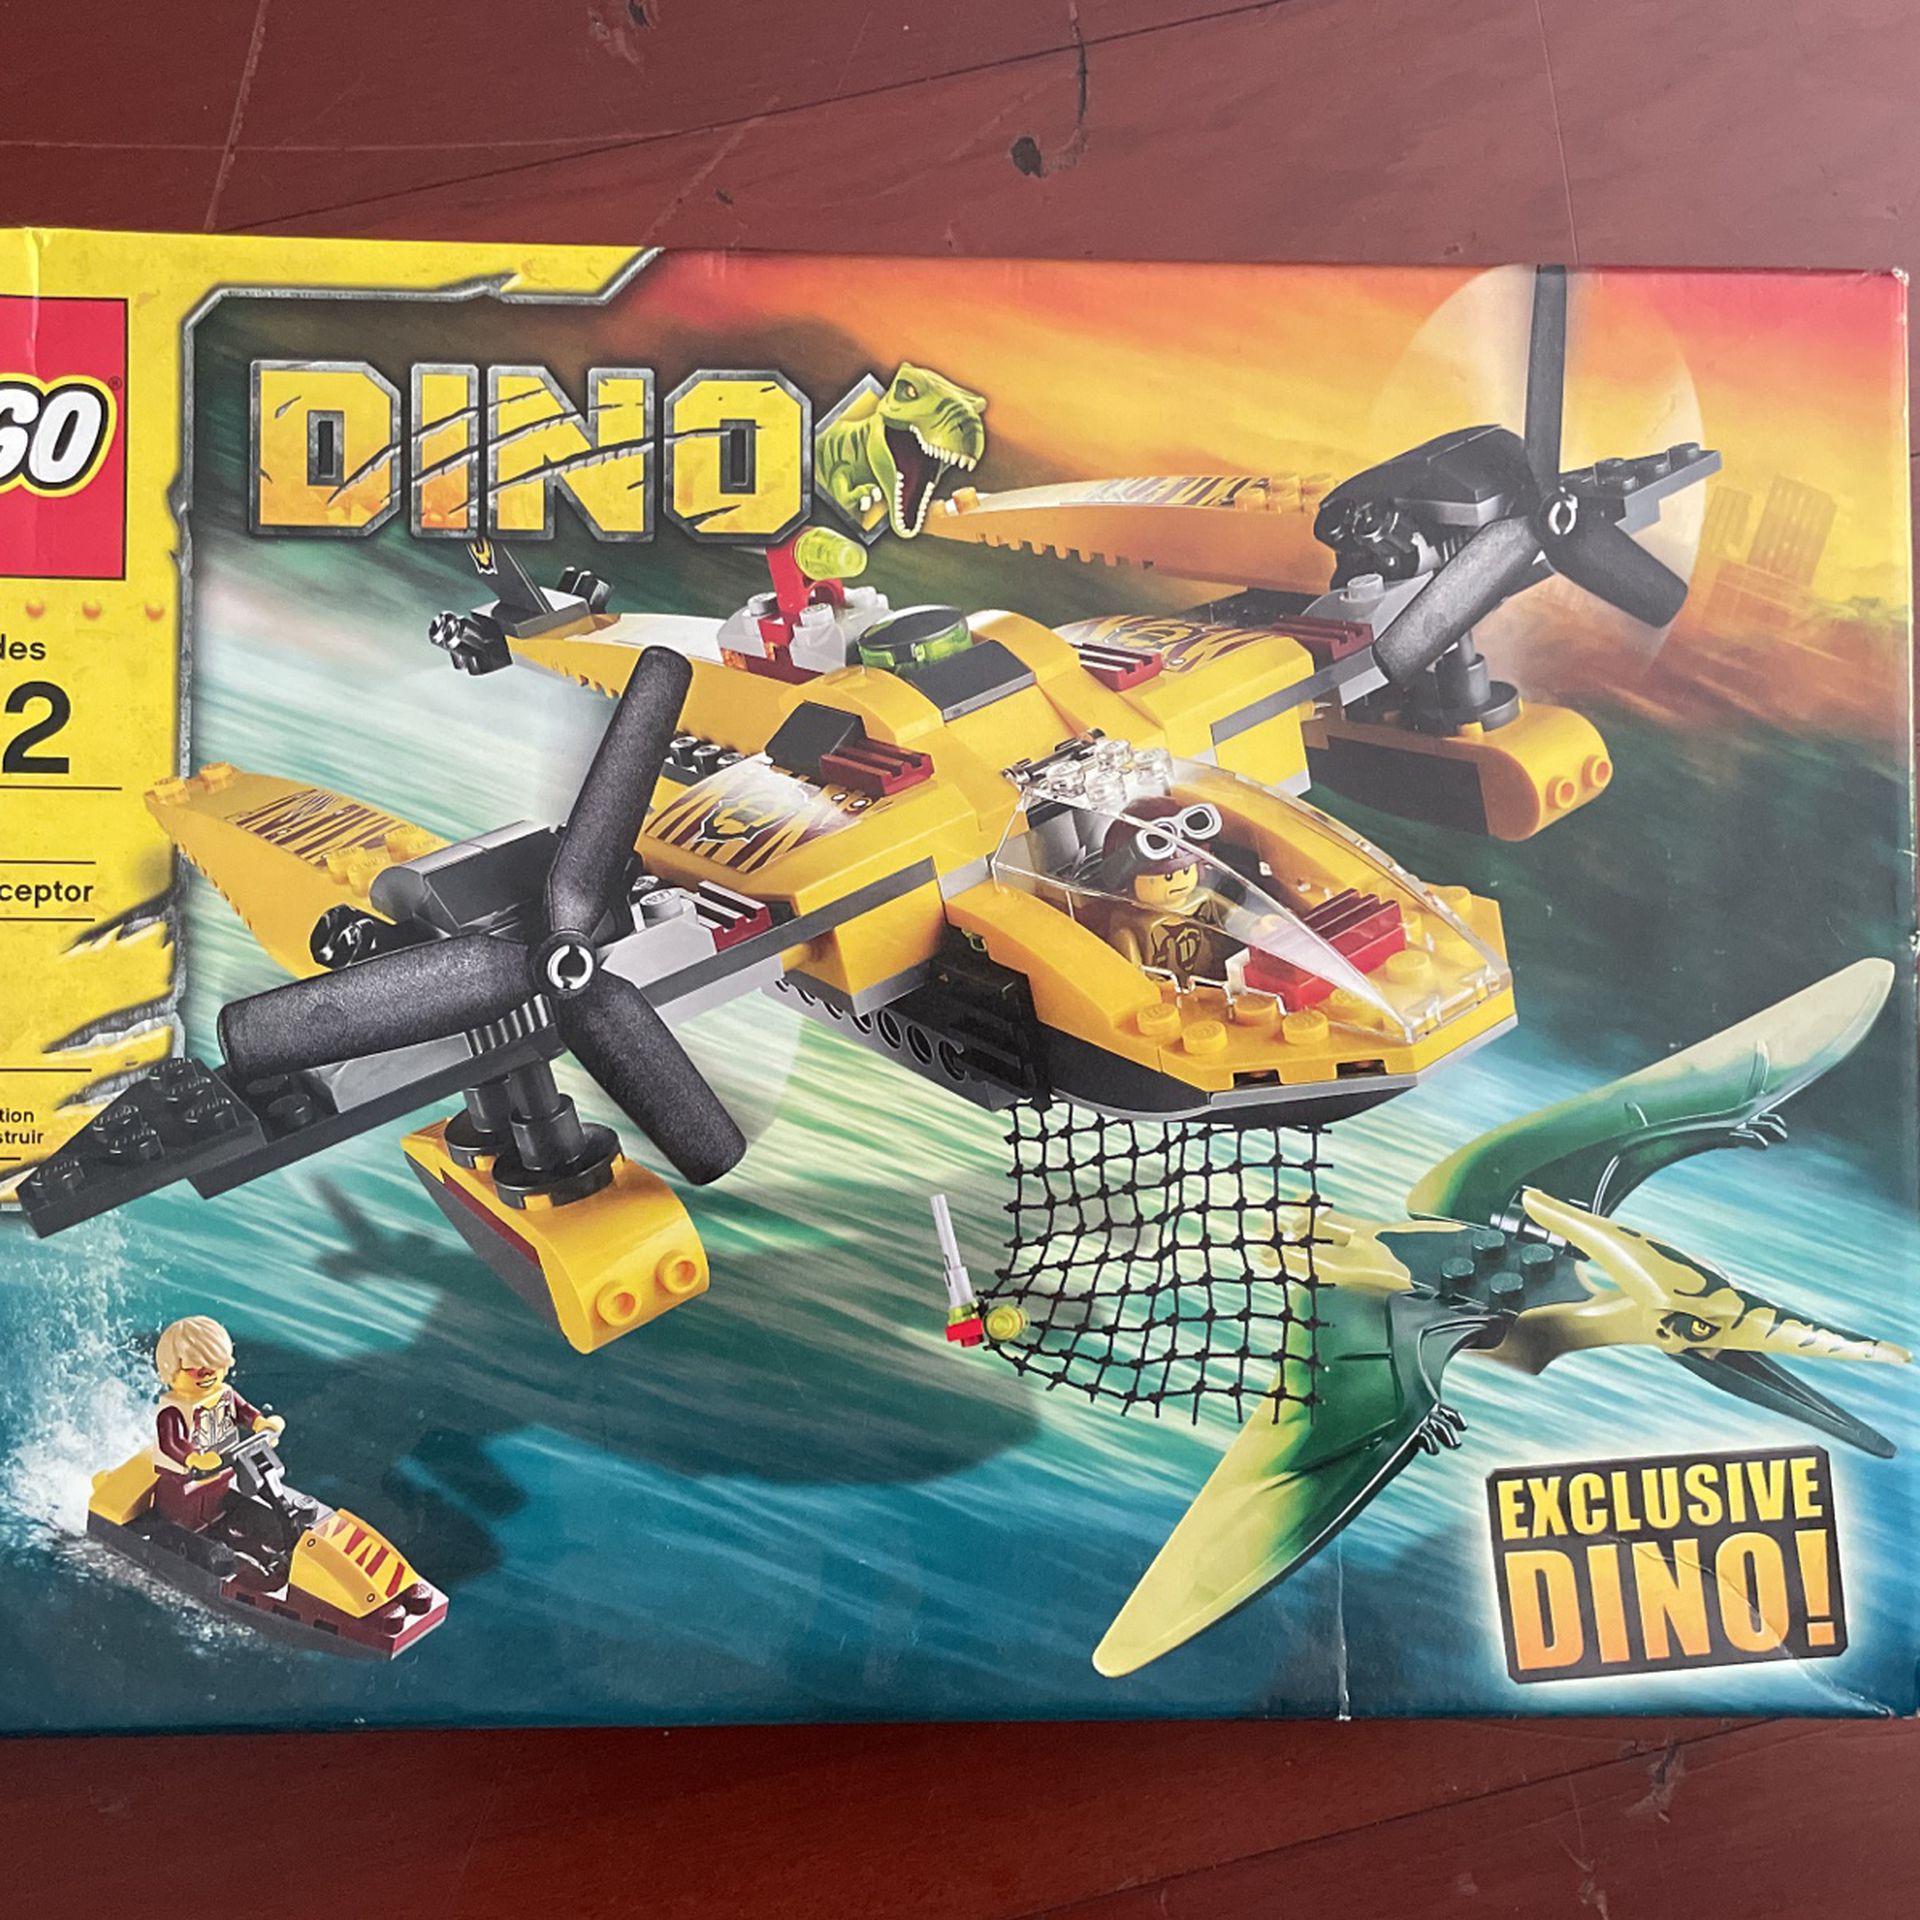 LEGO Dino Ocean Interceptor - 5888